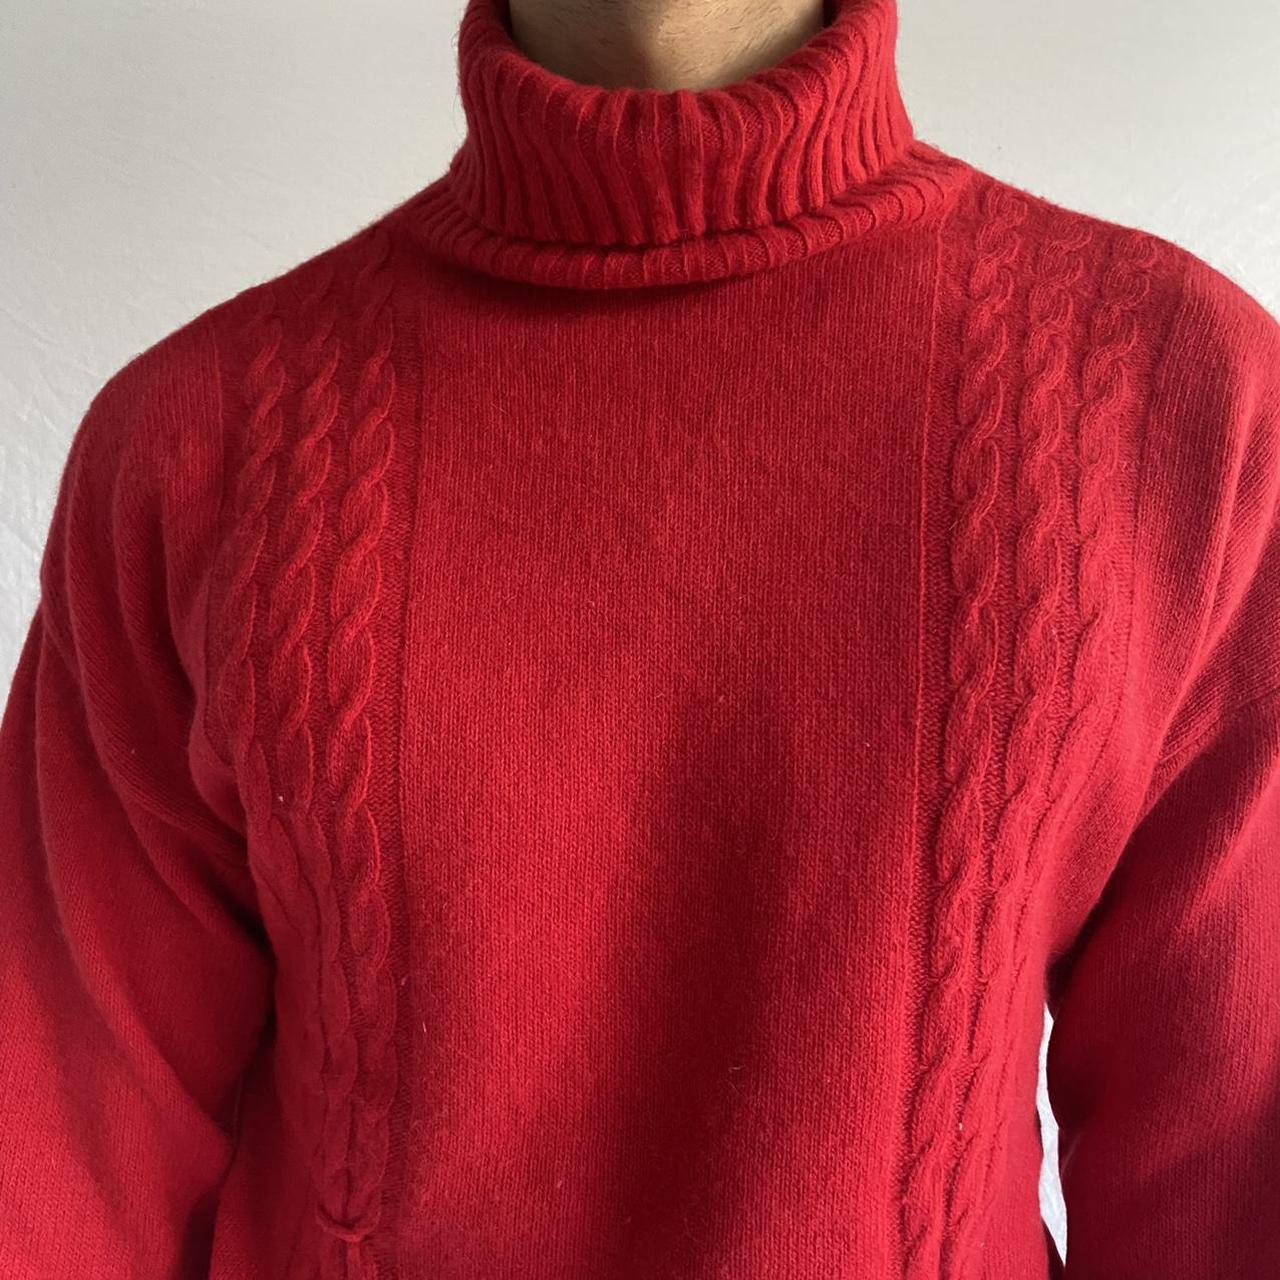 Men’s vintage 70s 80s turtle neck argyle knit... - Depop